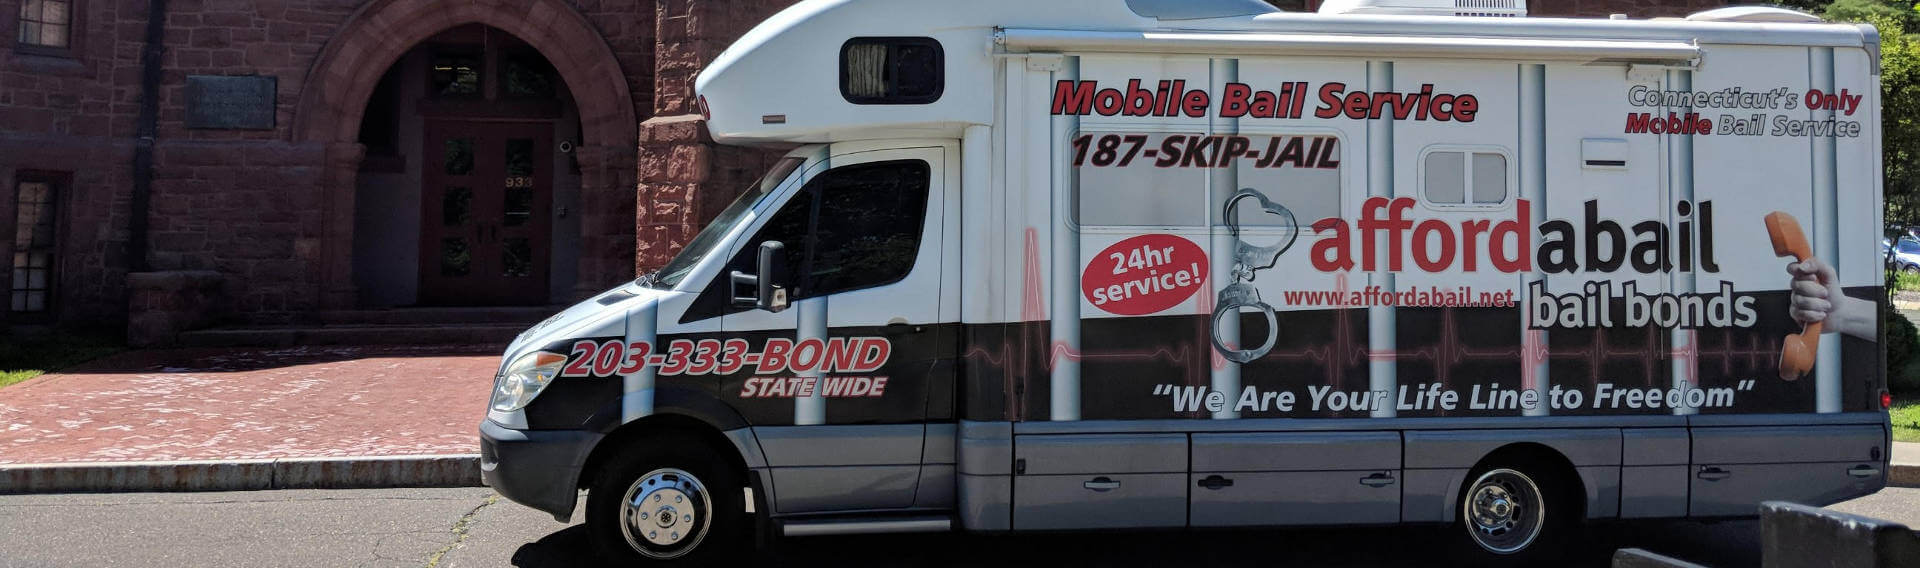 Mobile bail bonds service in Trumbull CT